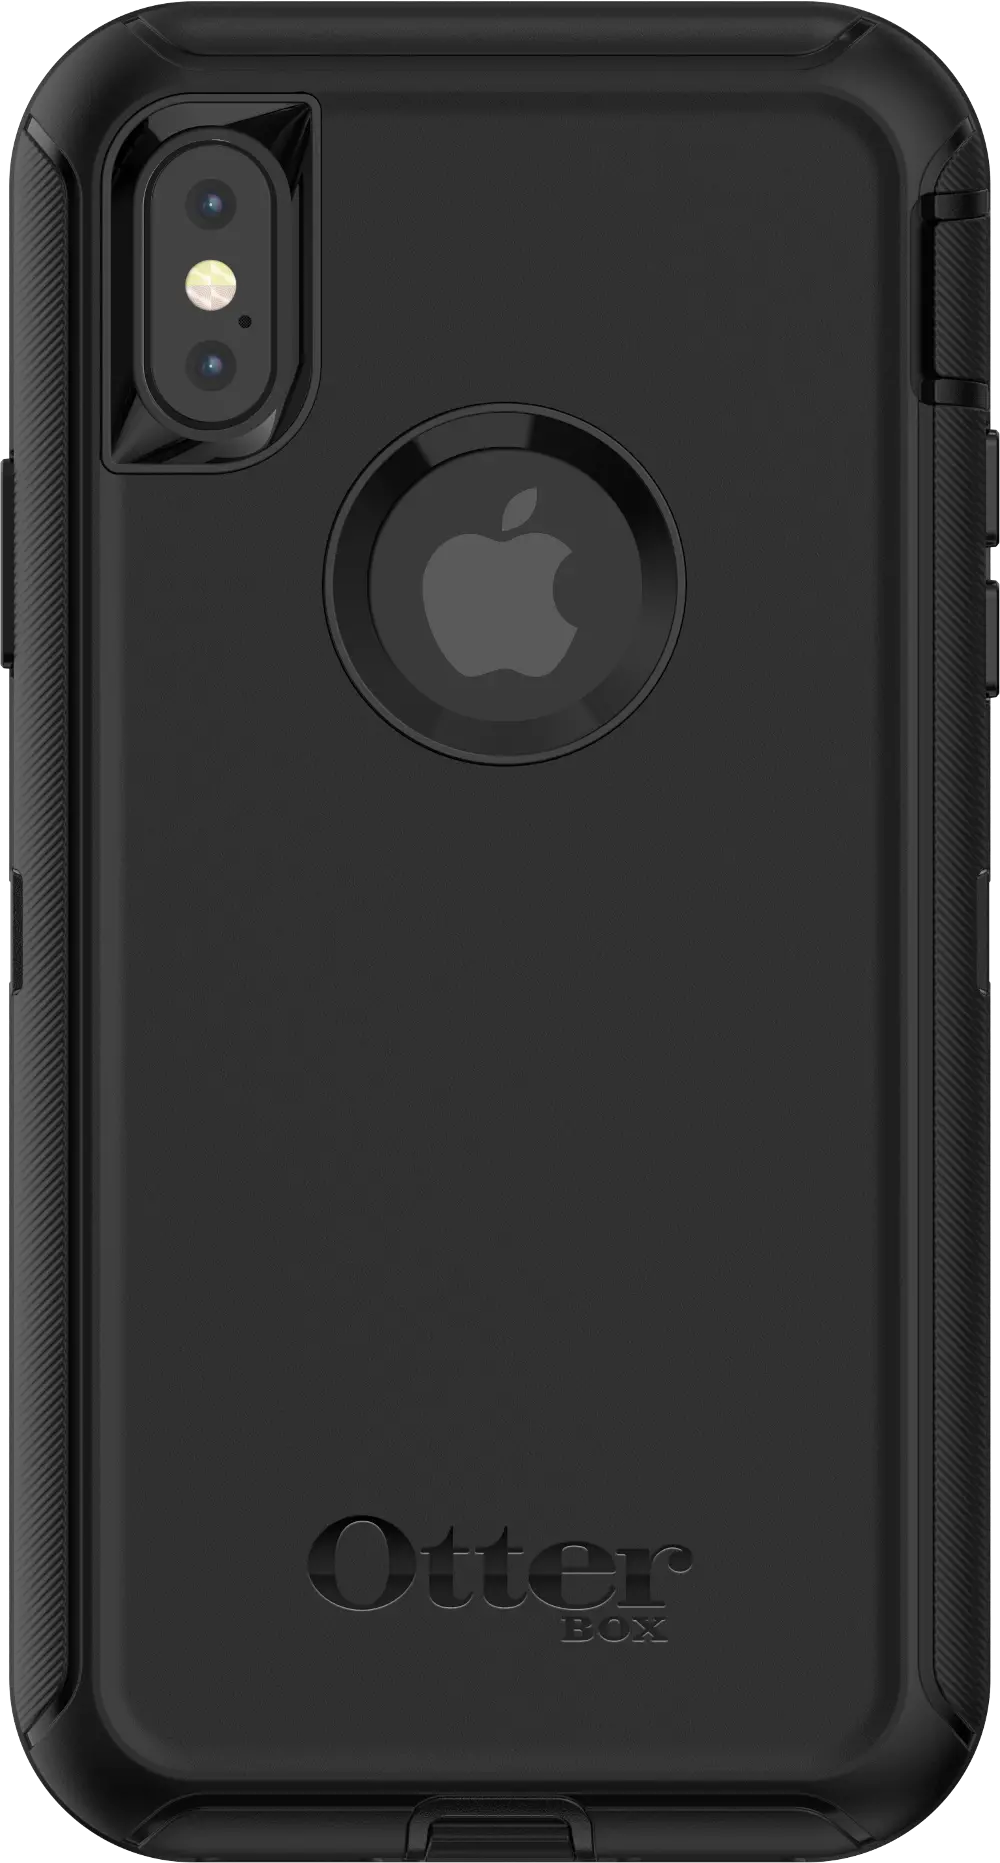 77-57026 OtterBox Defender Black iPhone X Case-1